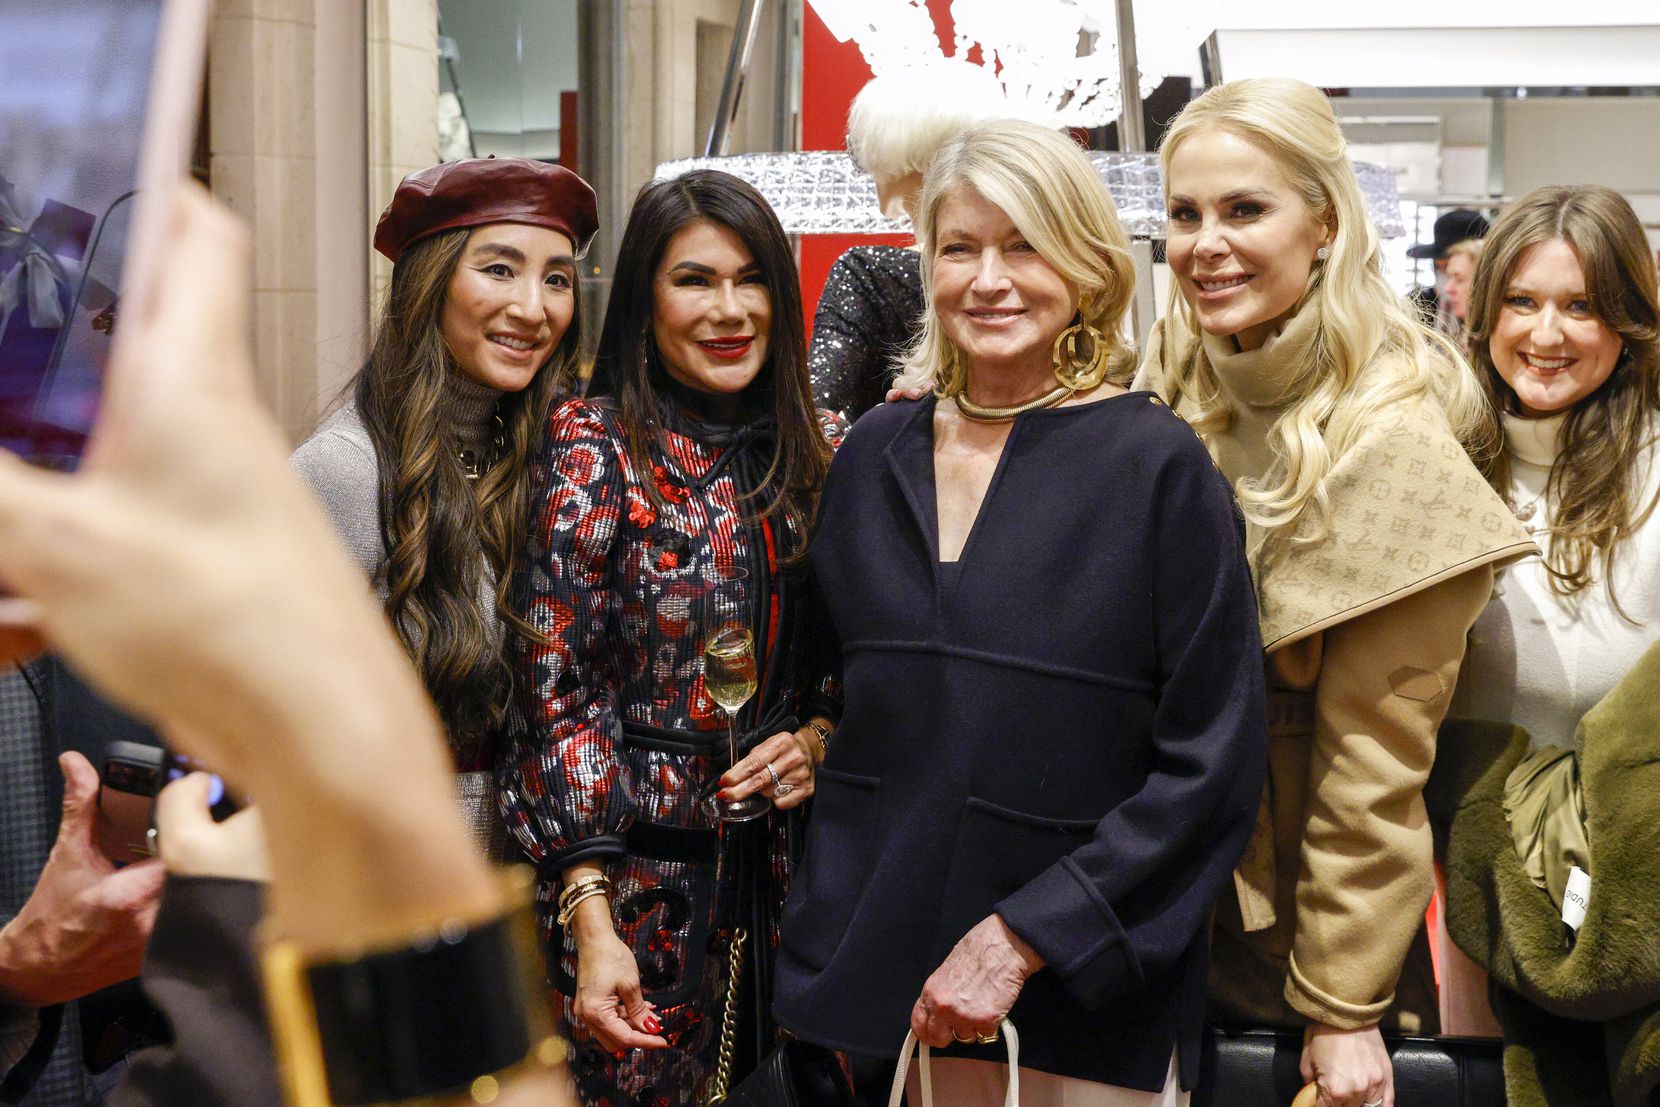 Neiman Marcus customers took selfies with Martha Stewart (center), including Kameron...